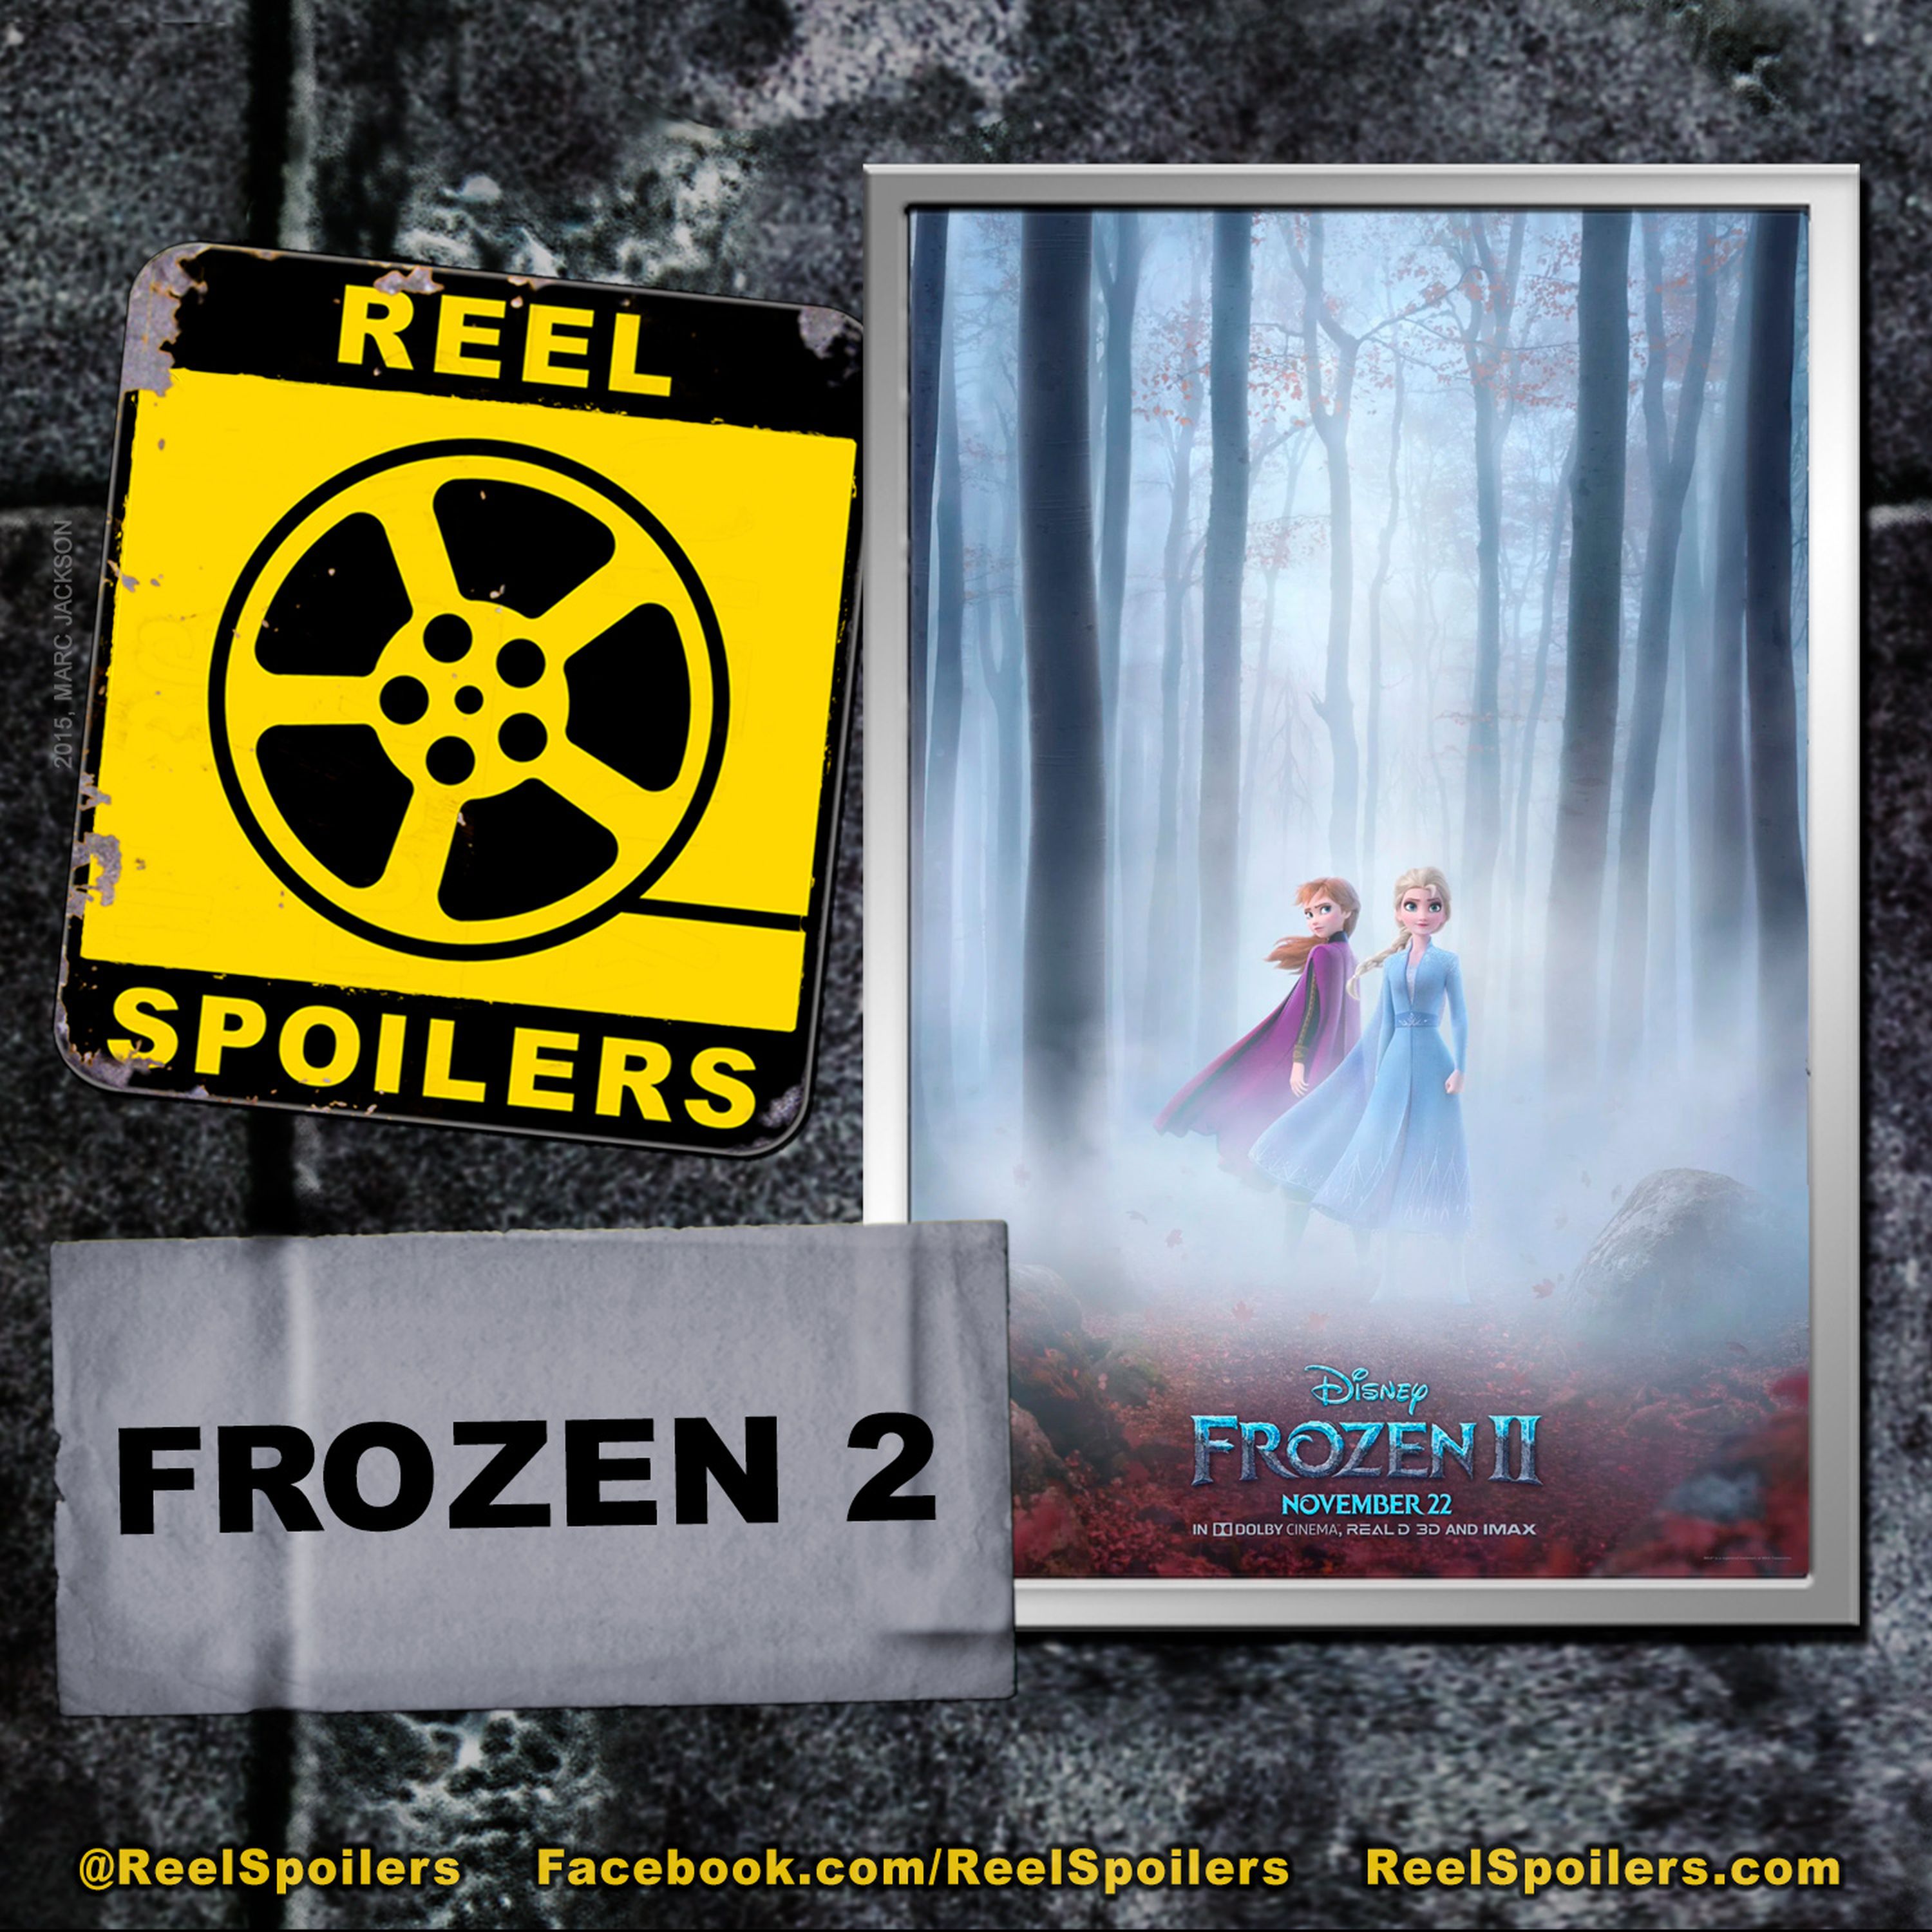 Disney's FROZEN 2 Starring Kristen Bell, Idina Menzel, Josh Gad Image